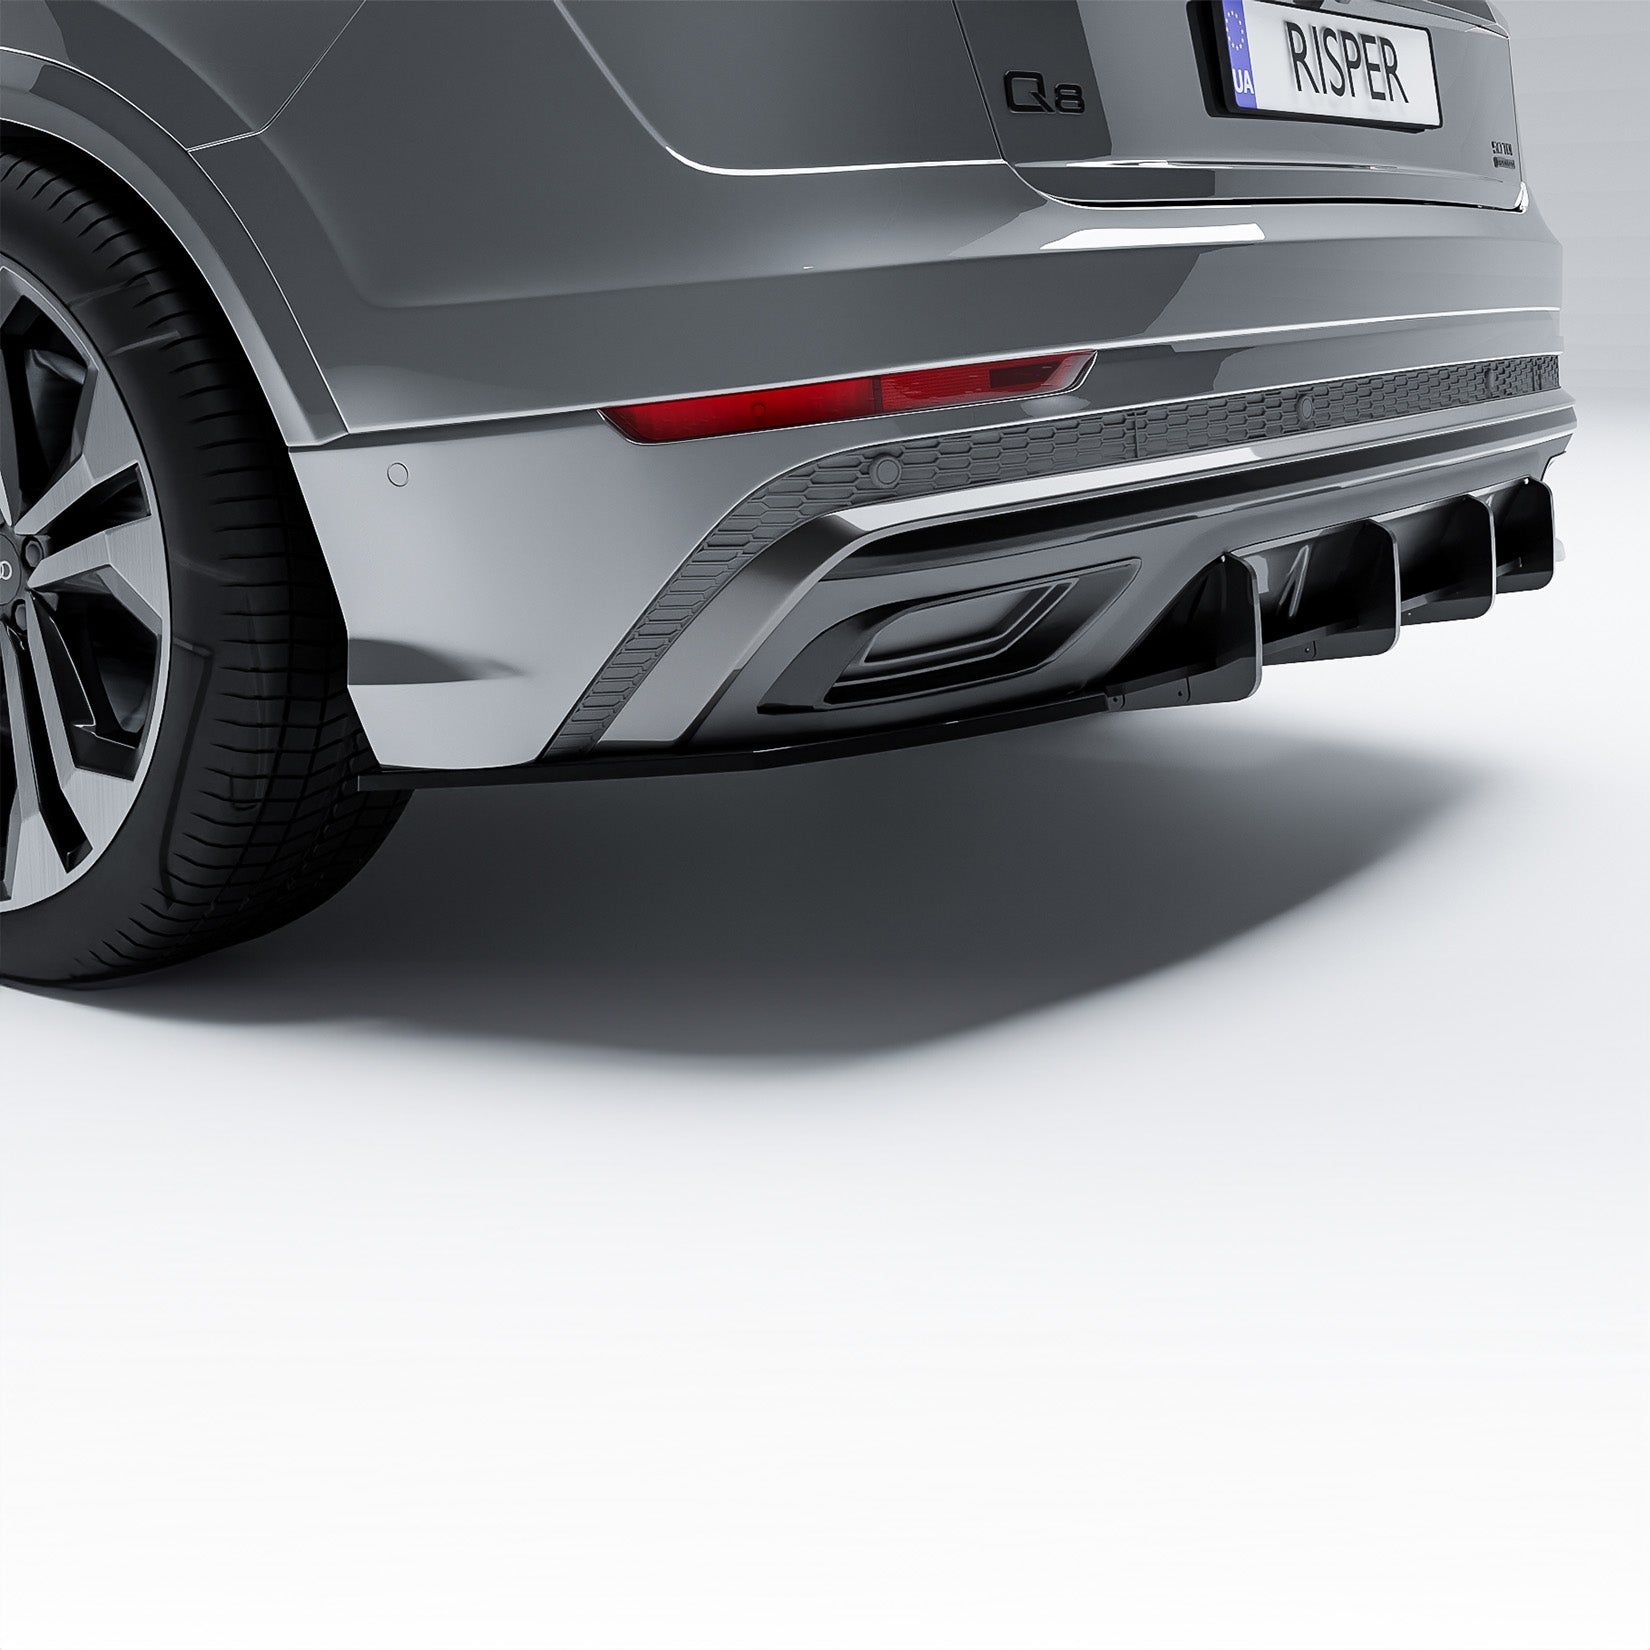 Audi Q8 S Line 2018+ Full Aero Low Line Kit In Gloss Black By Risper Styling